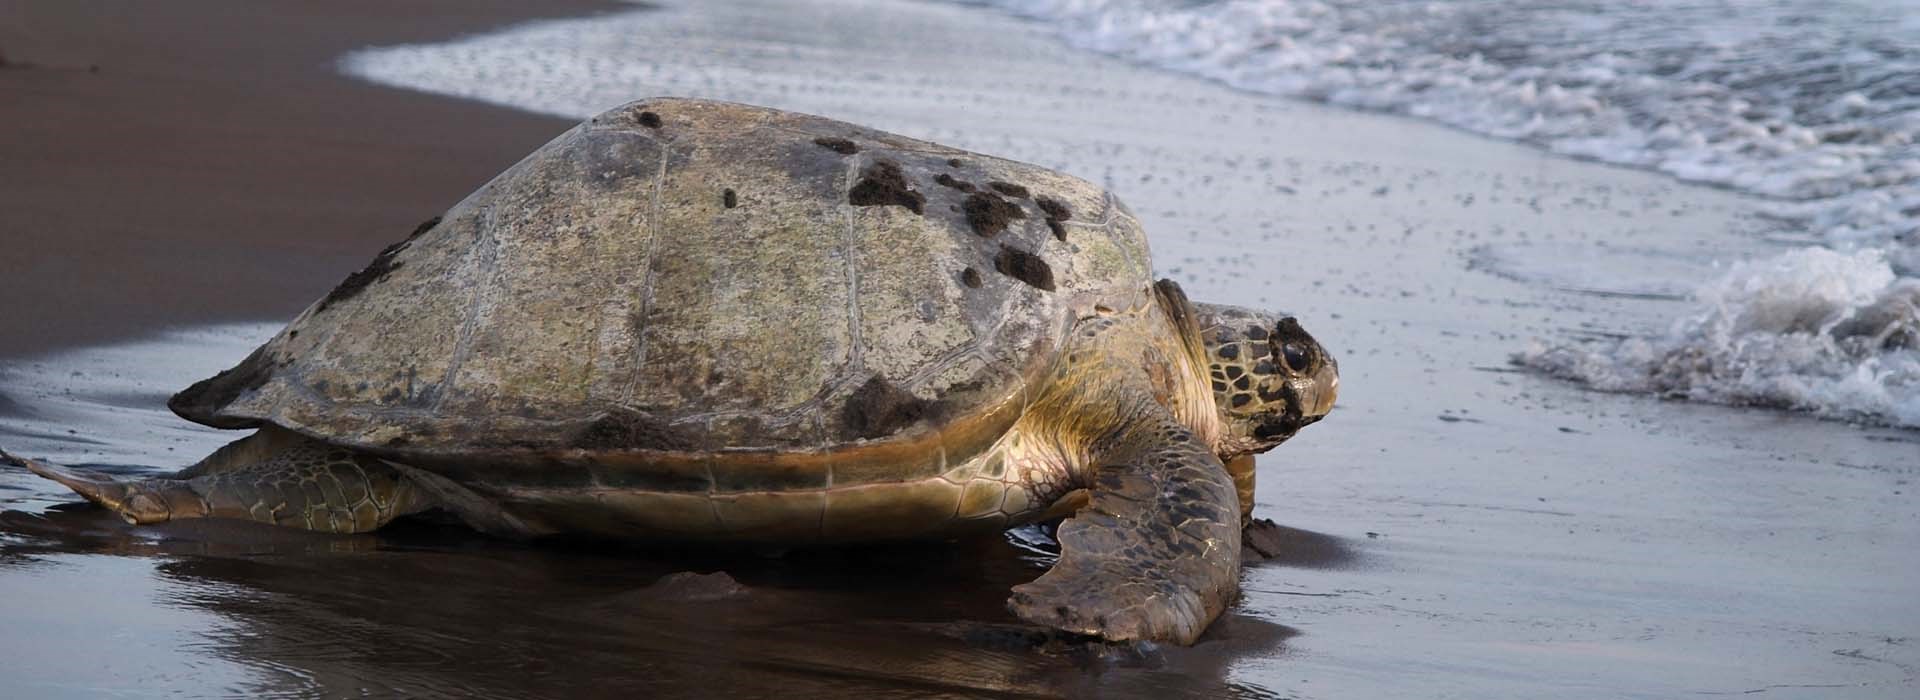 tortue plage voyage costa rica solos